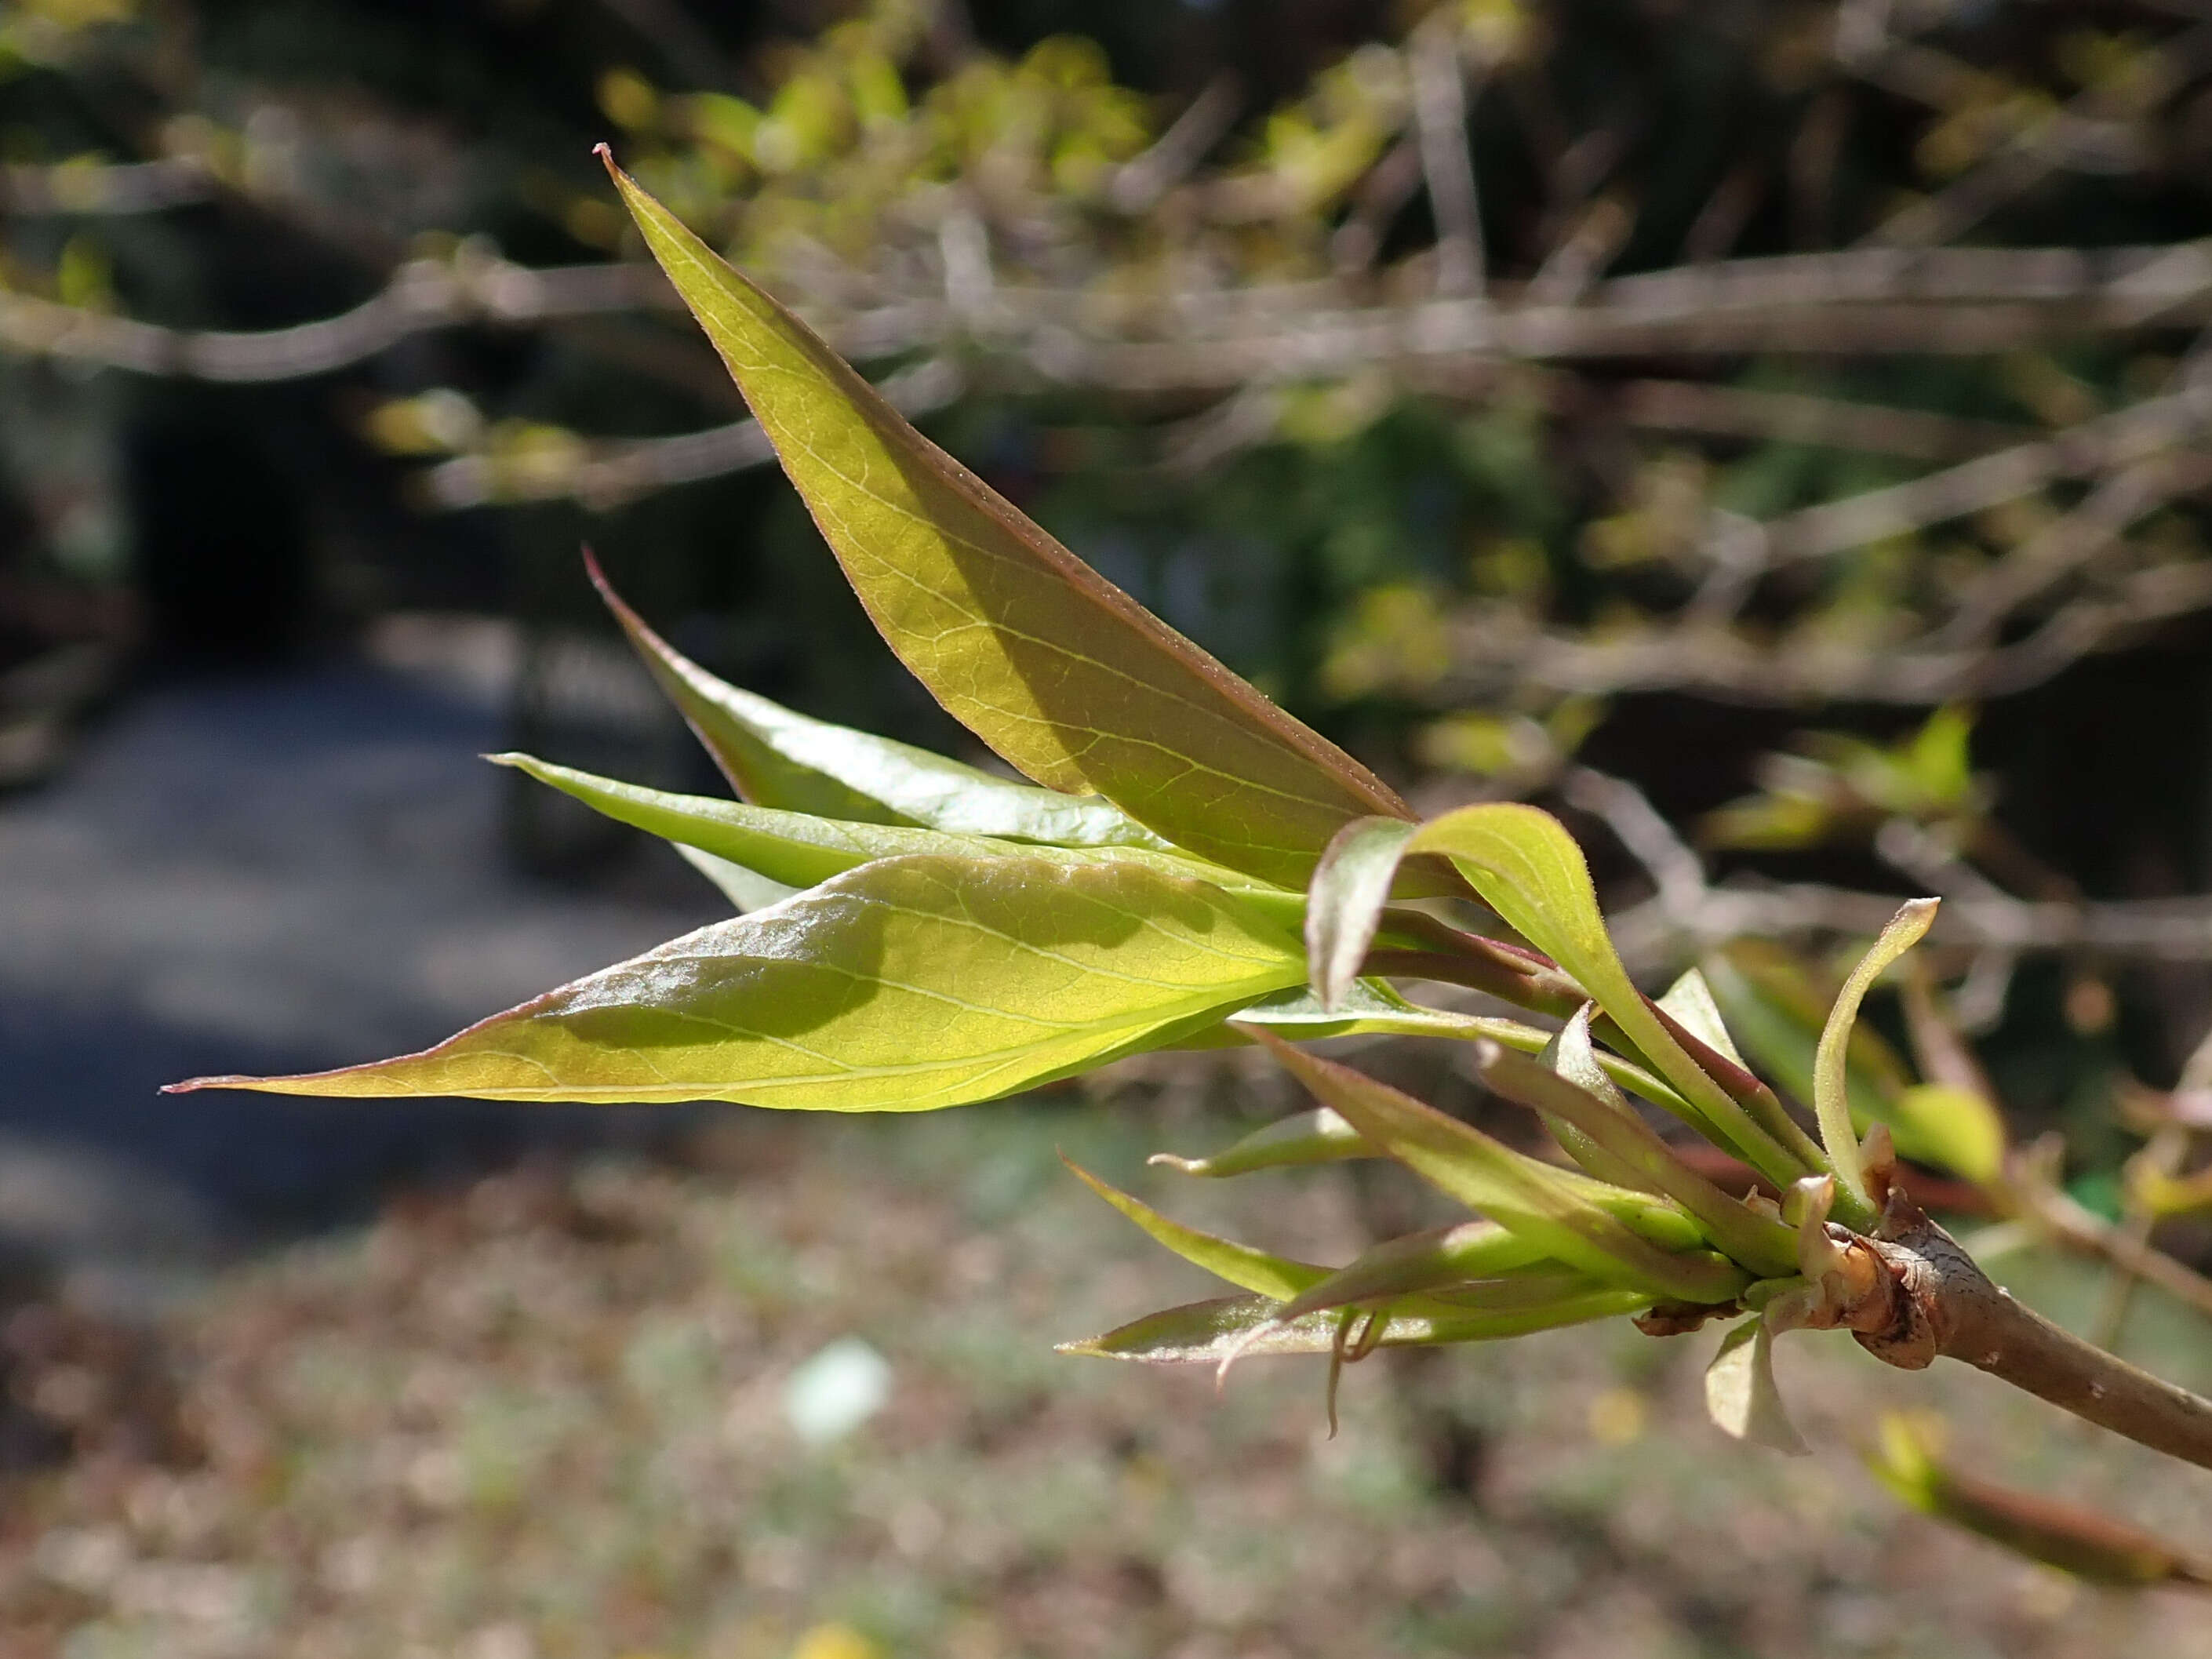 Image of Japanese Tree Lilac